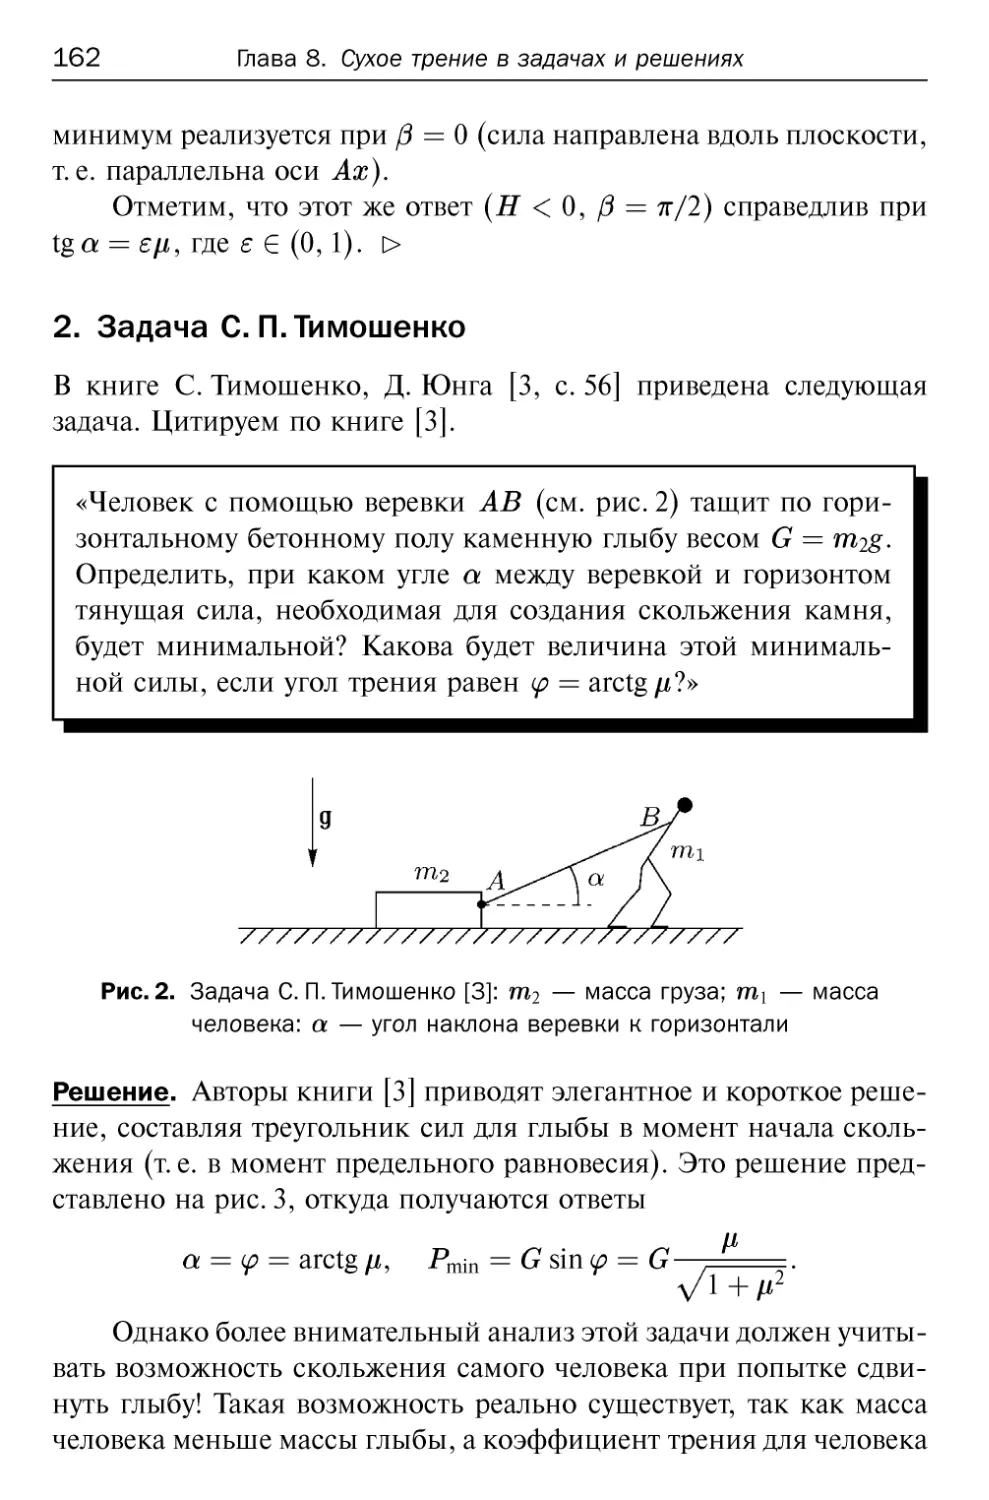 2. Задача С. П. Тимошенко